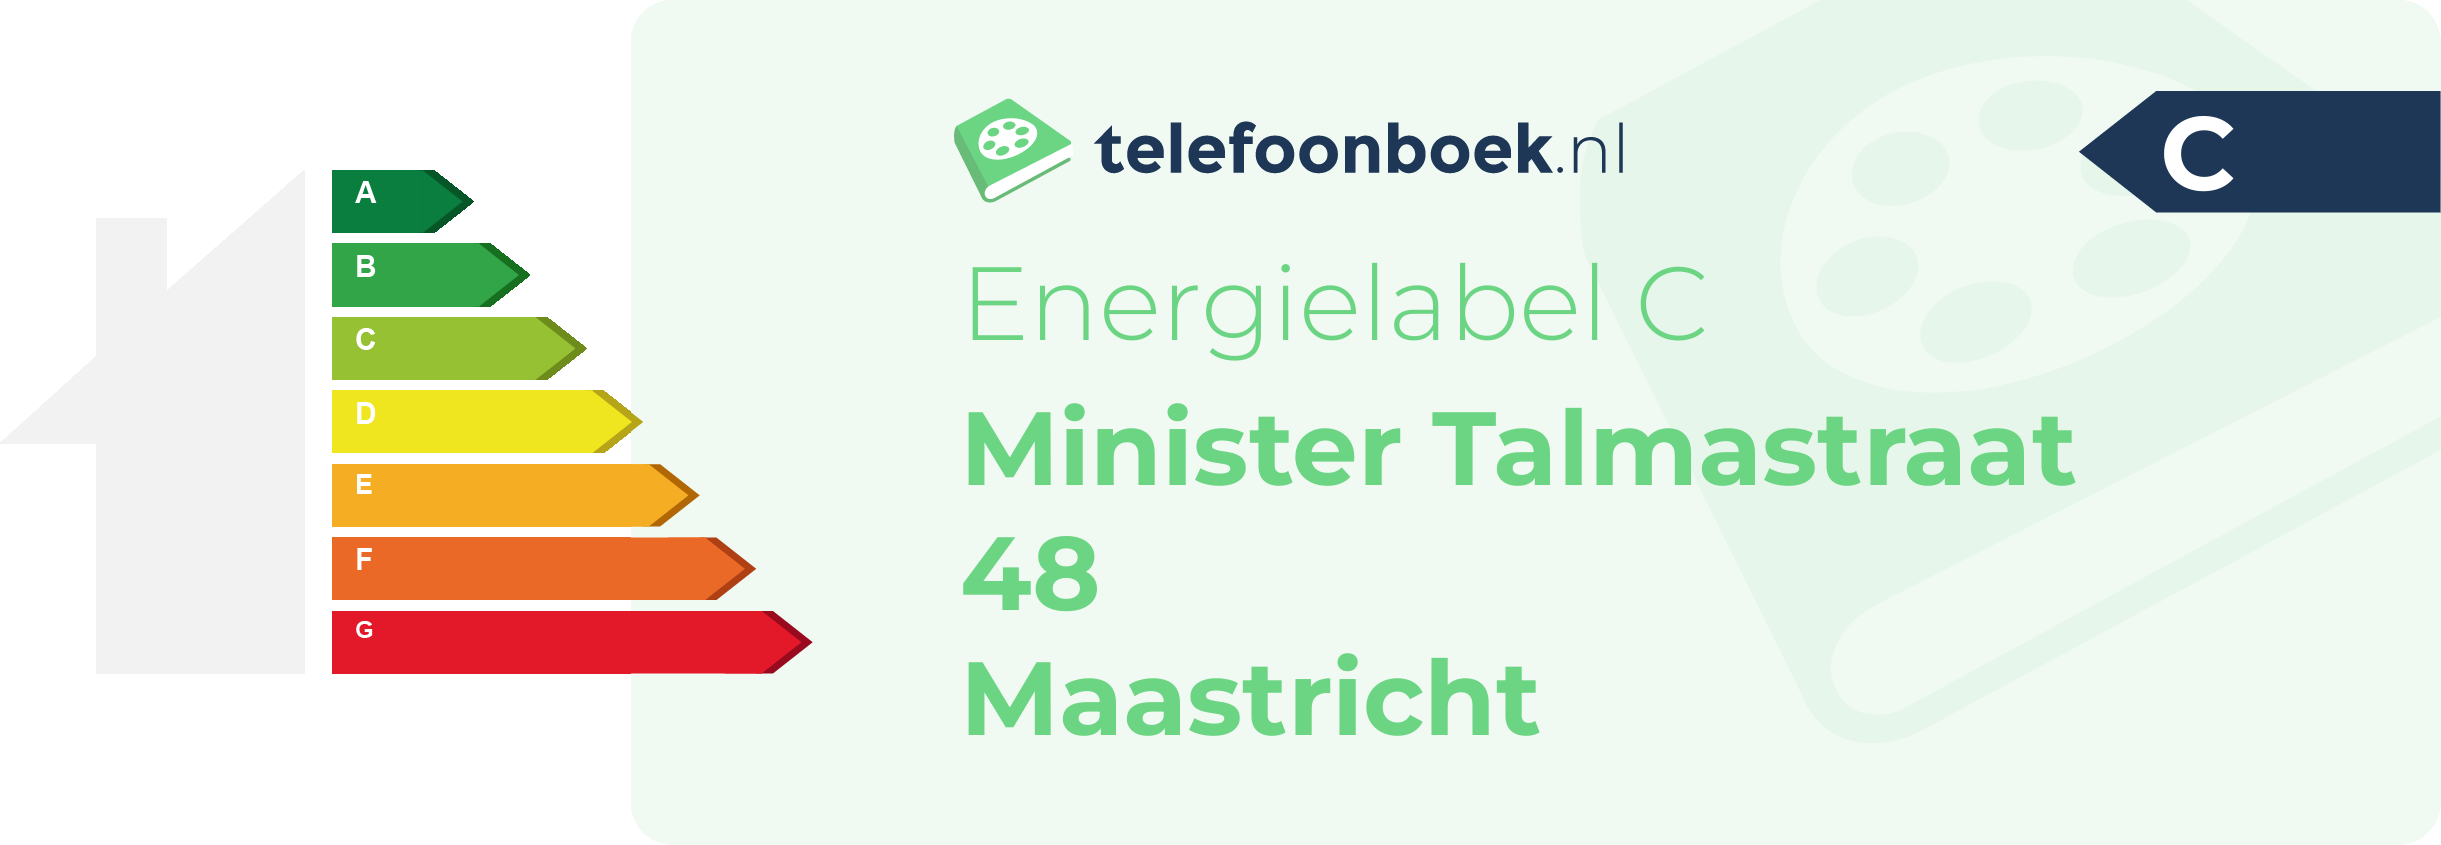 Energielabel Minister Talmastraat 48 Maastricht